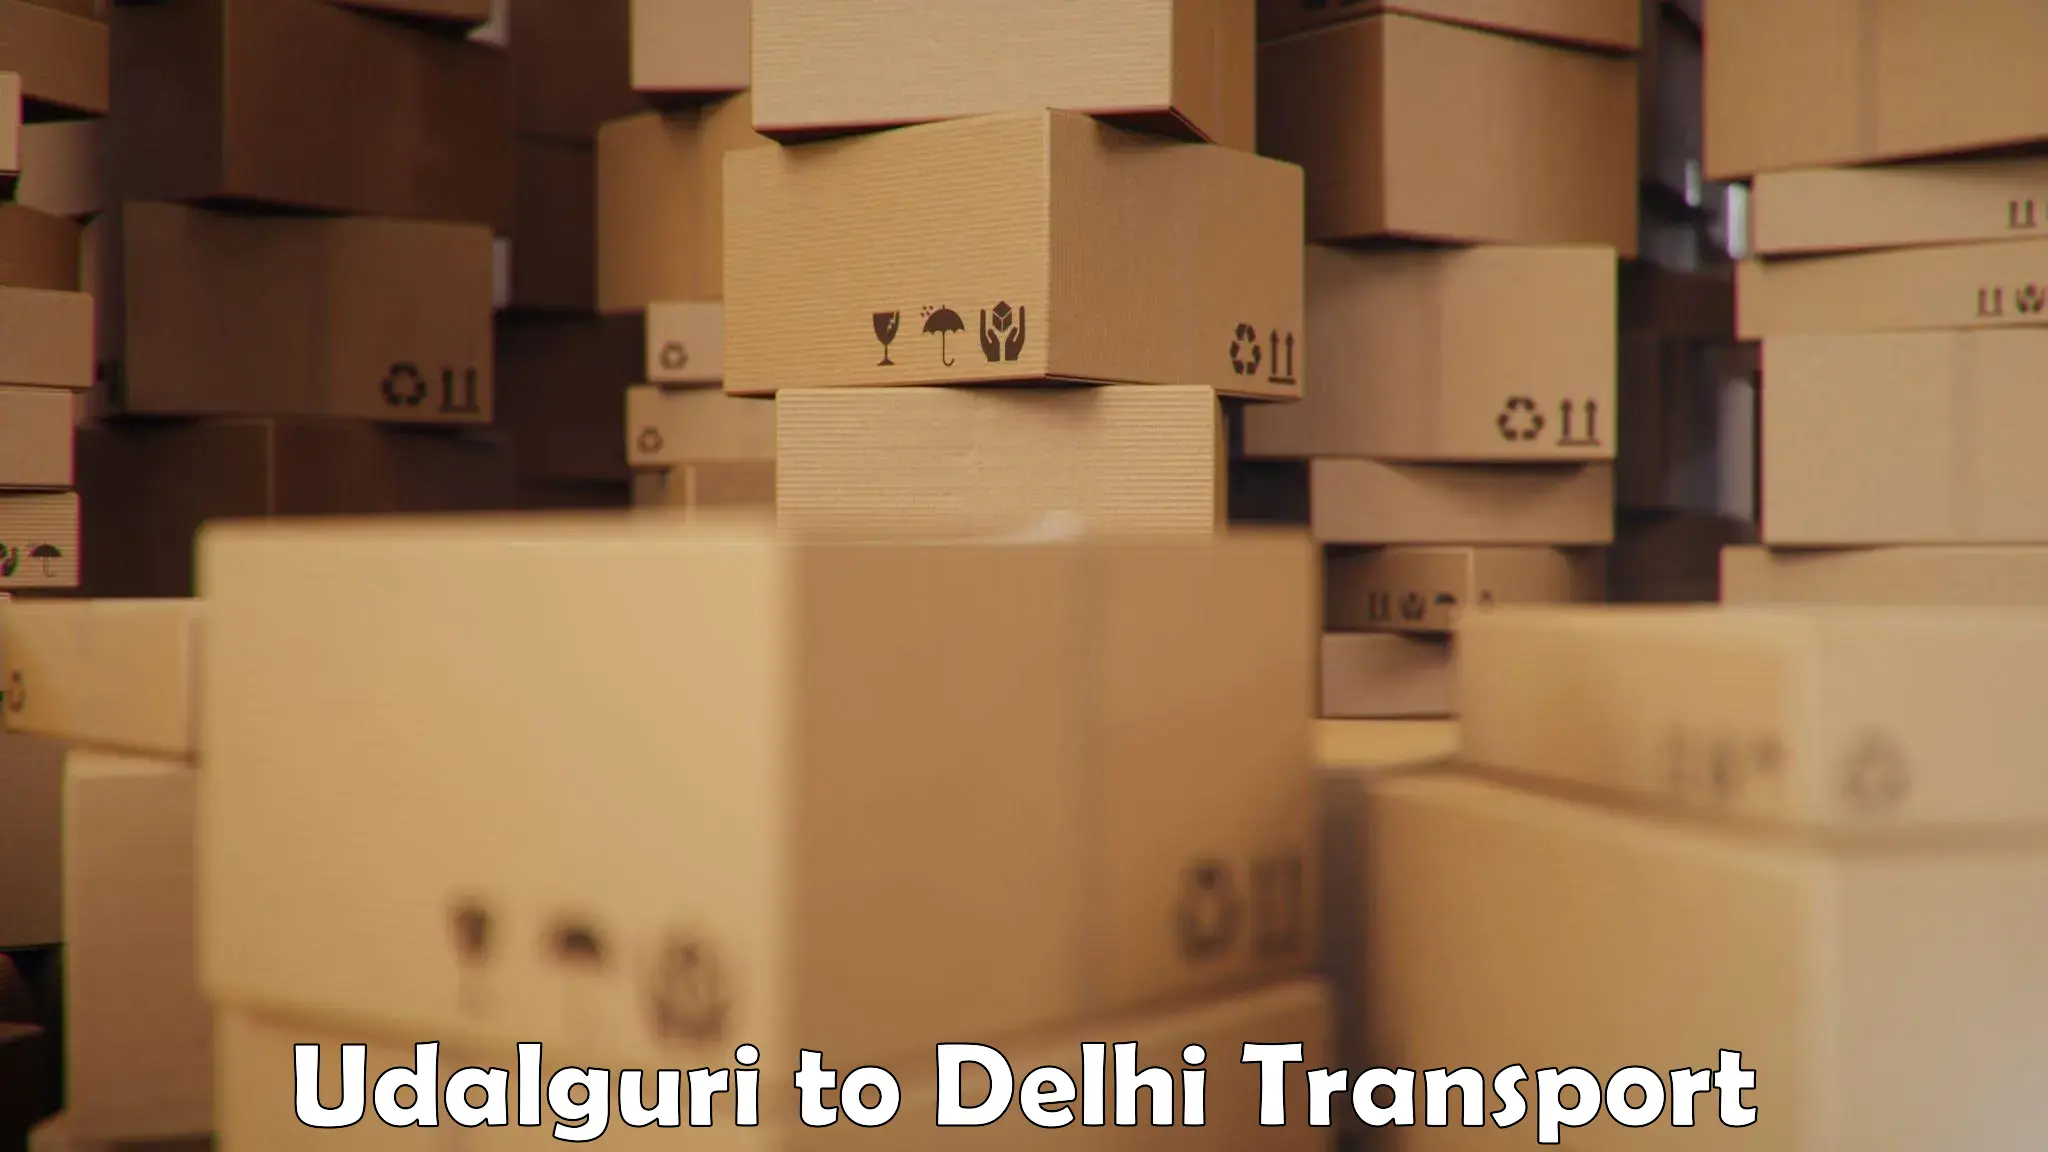 Shipping partner Udalguri to IIT Delhi